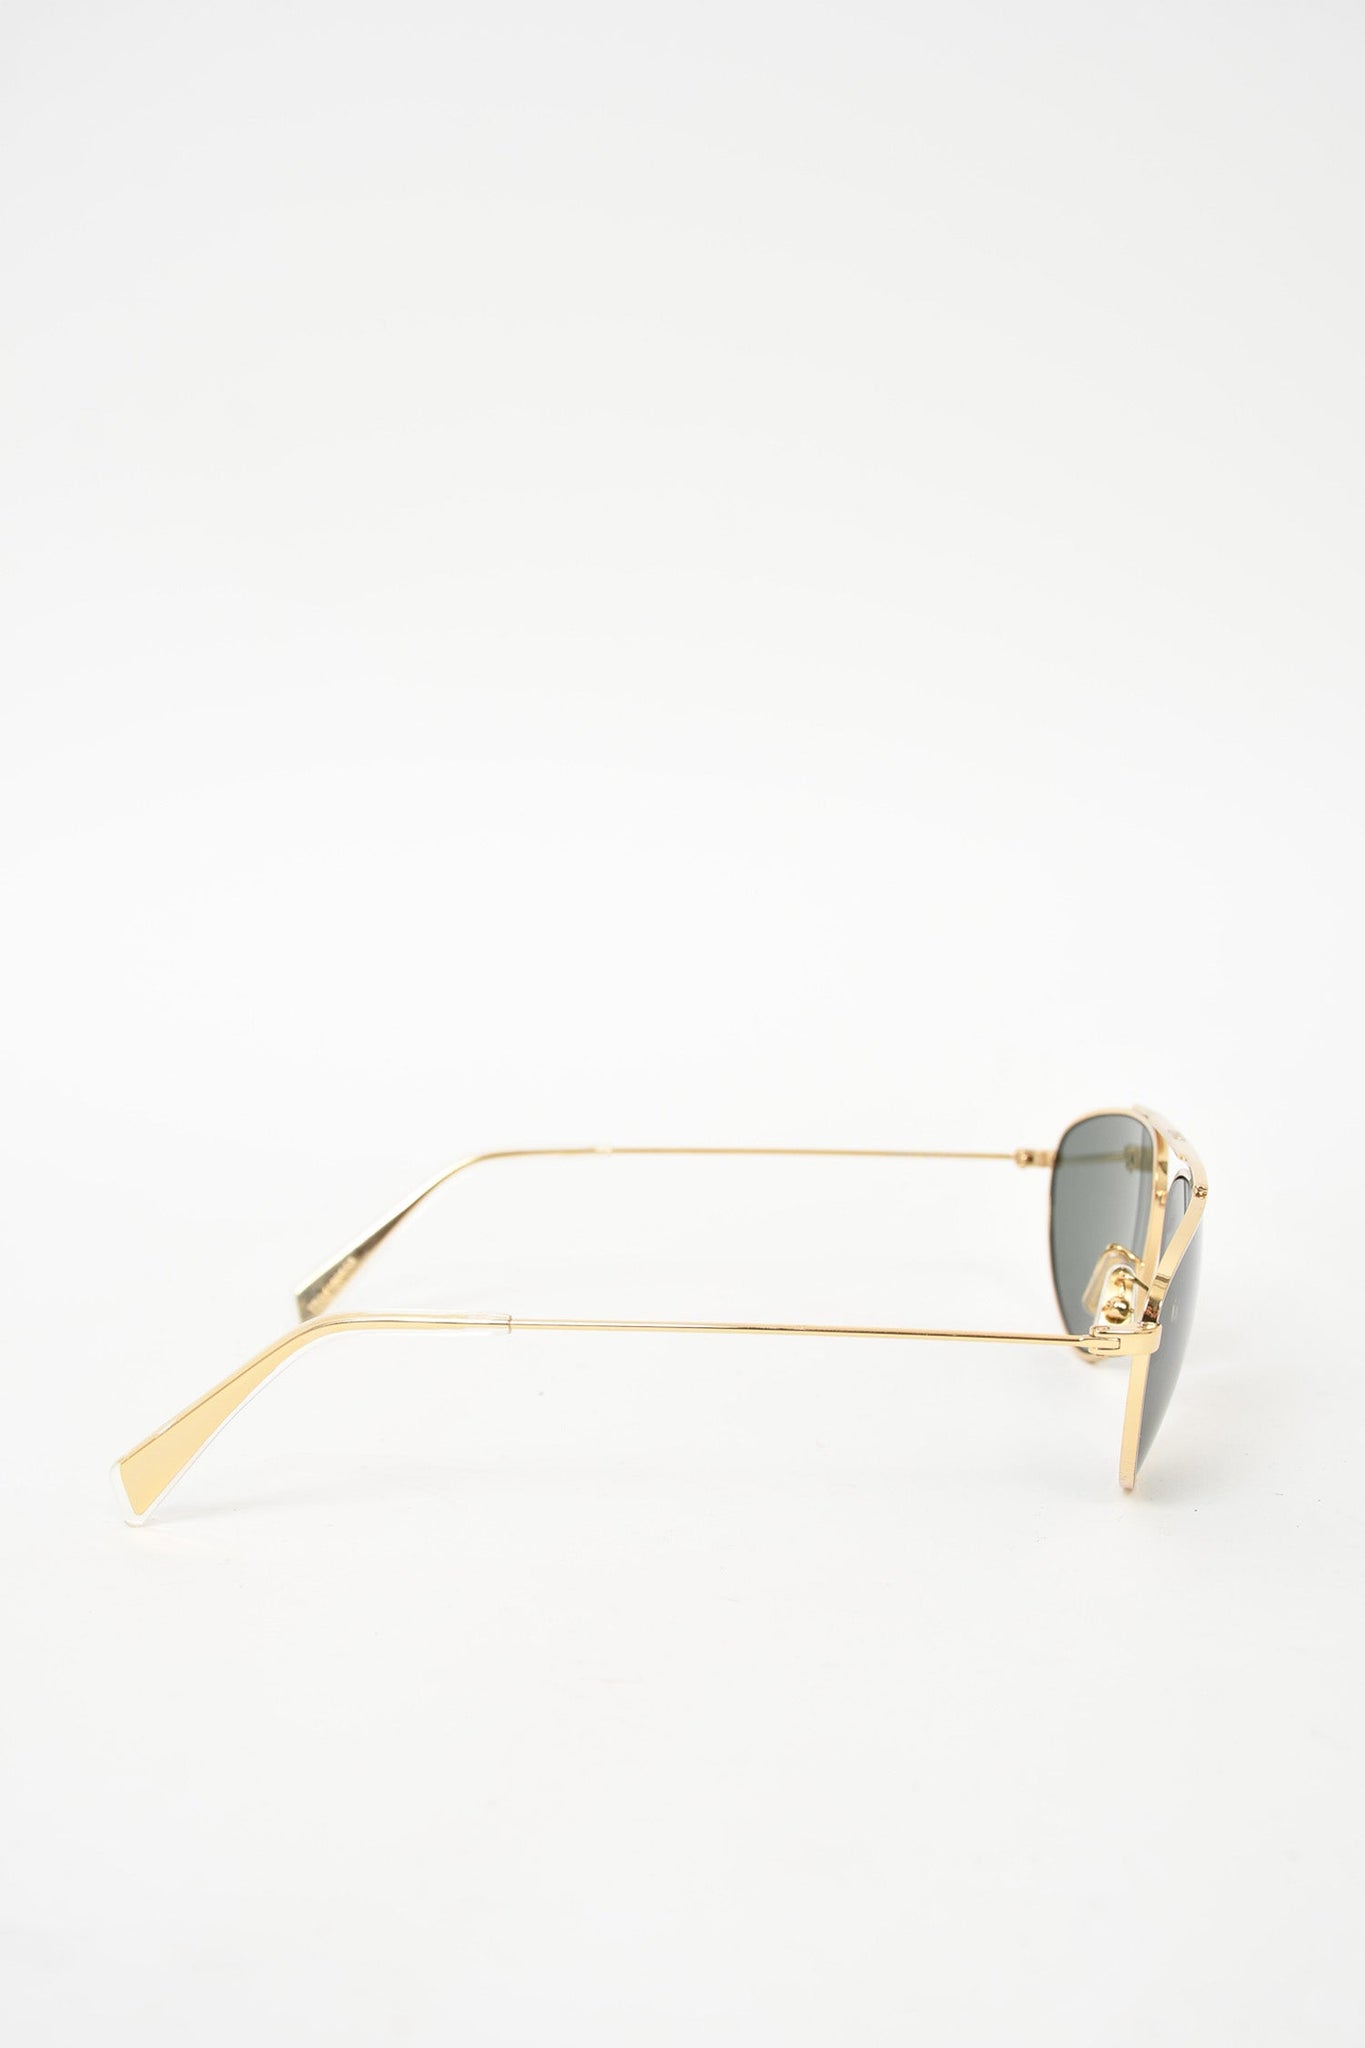 Celine Gold Thin Metal Frame Oval Sunglasses